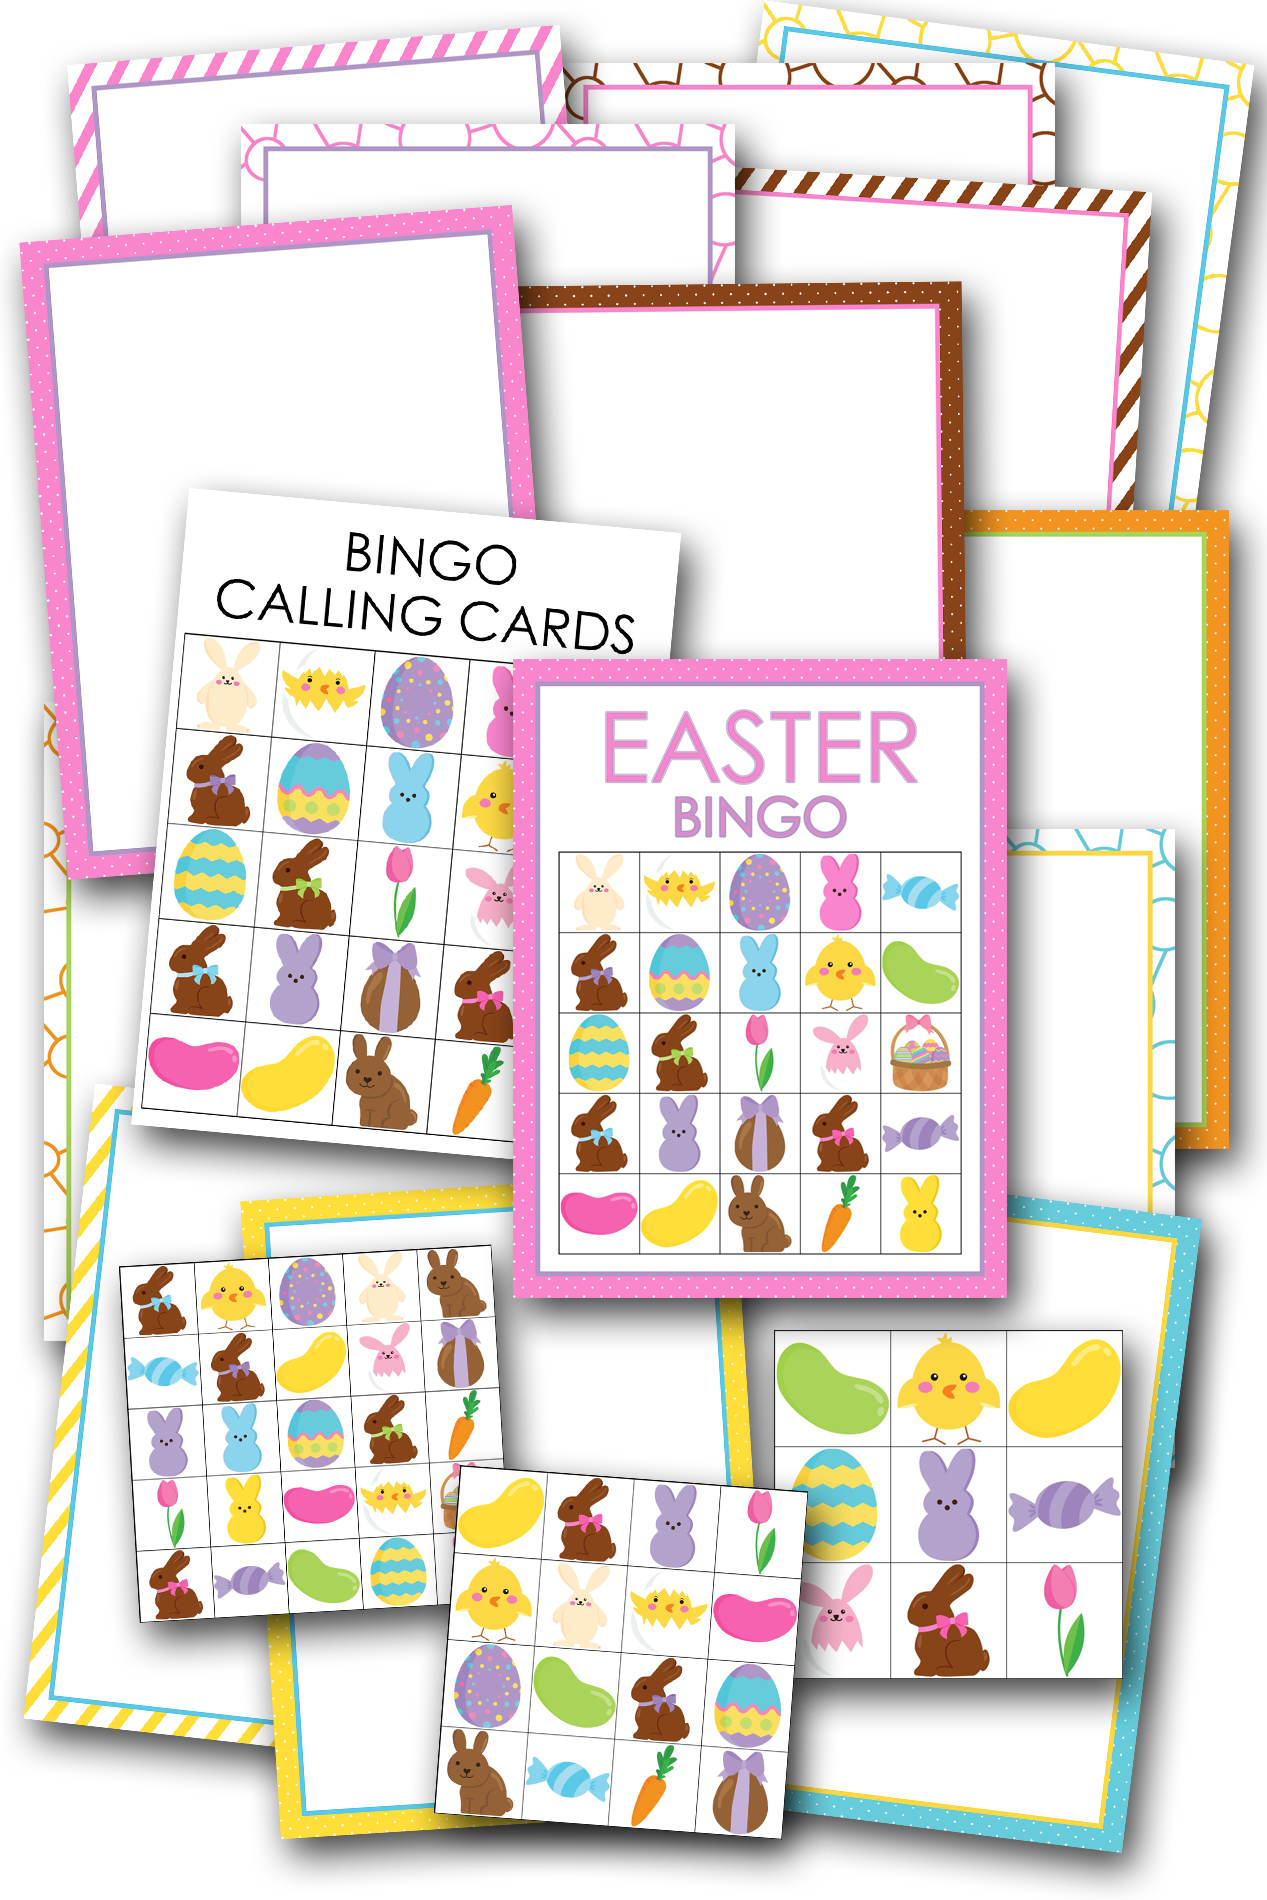 Simply Love PLR Easter Bingo Template Set